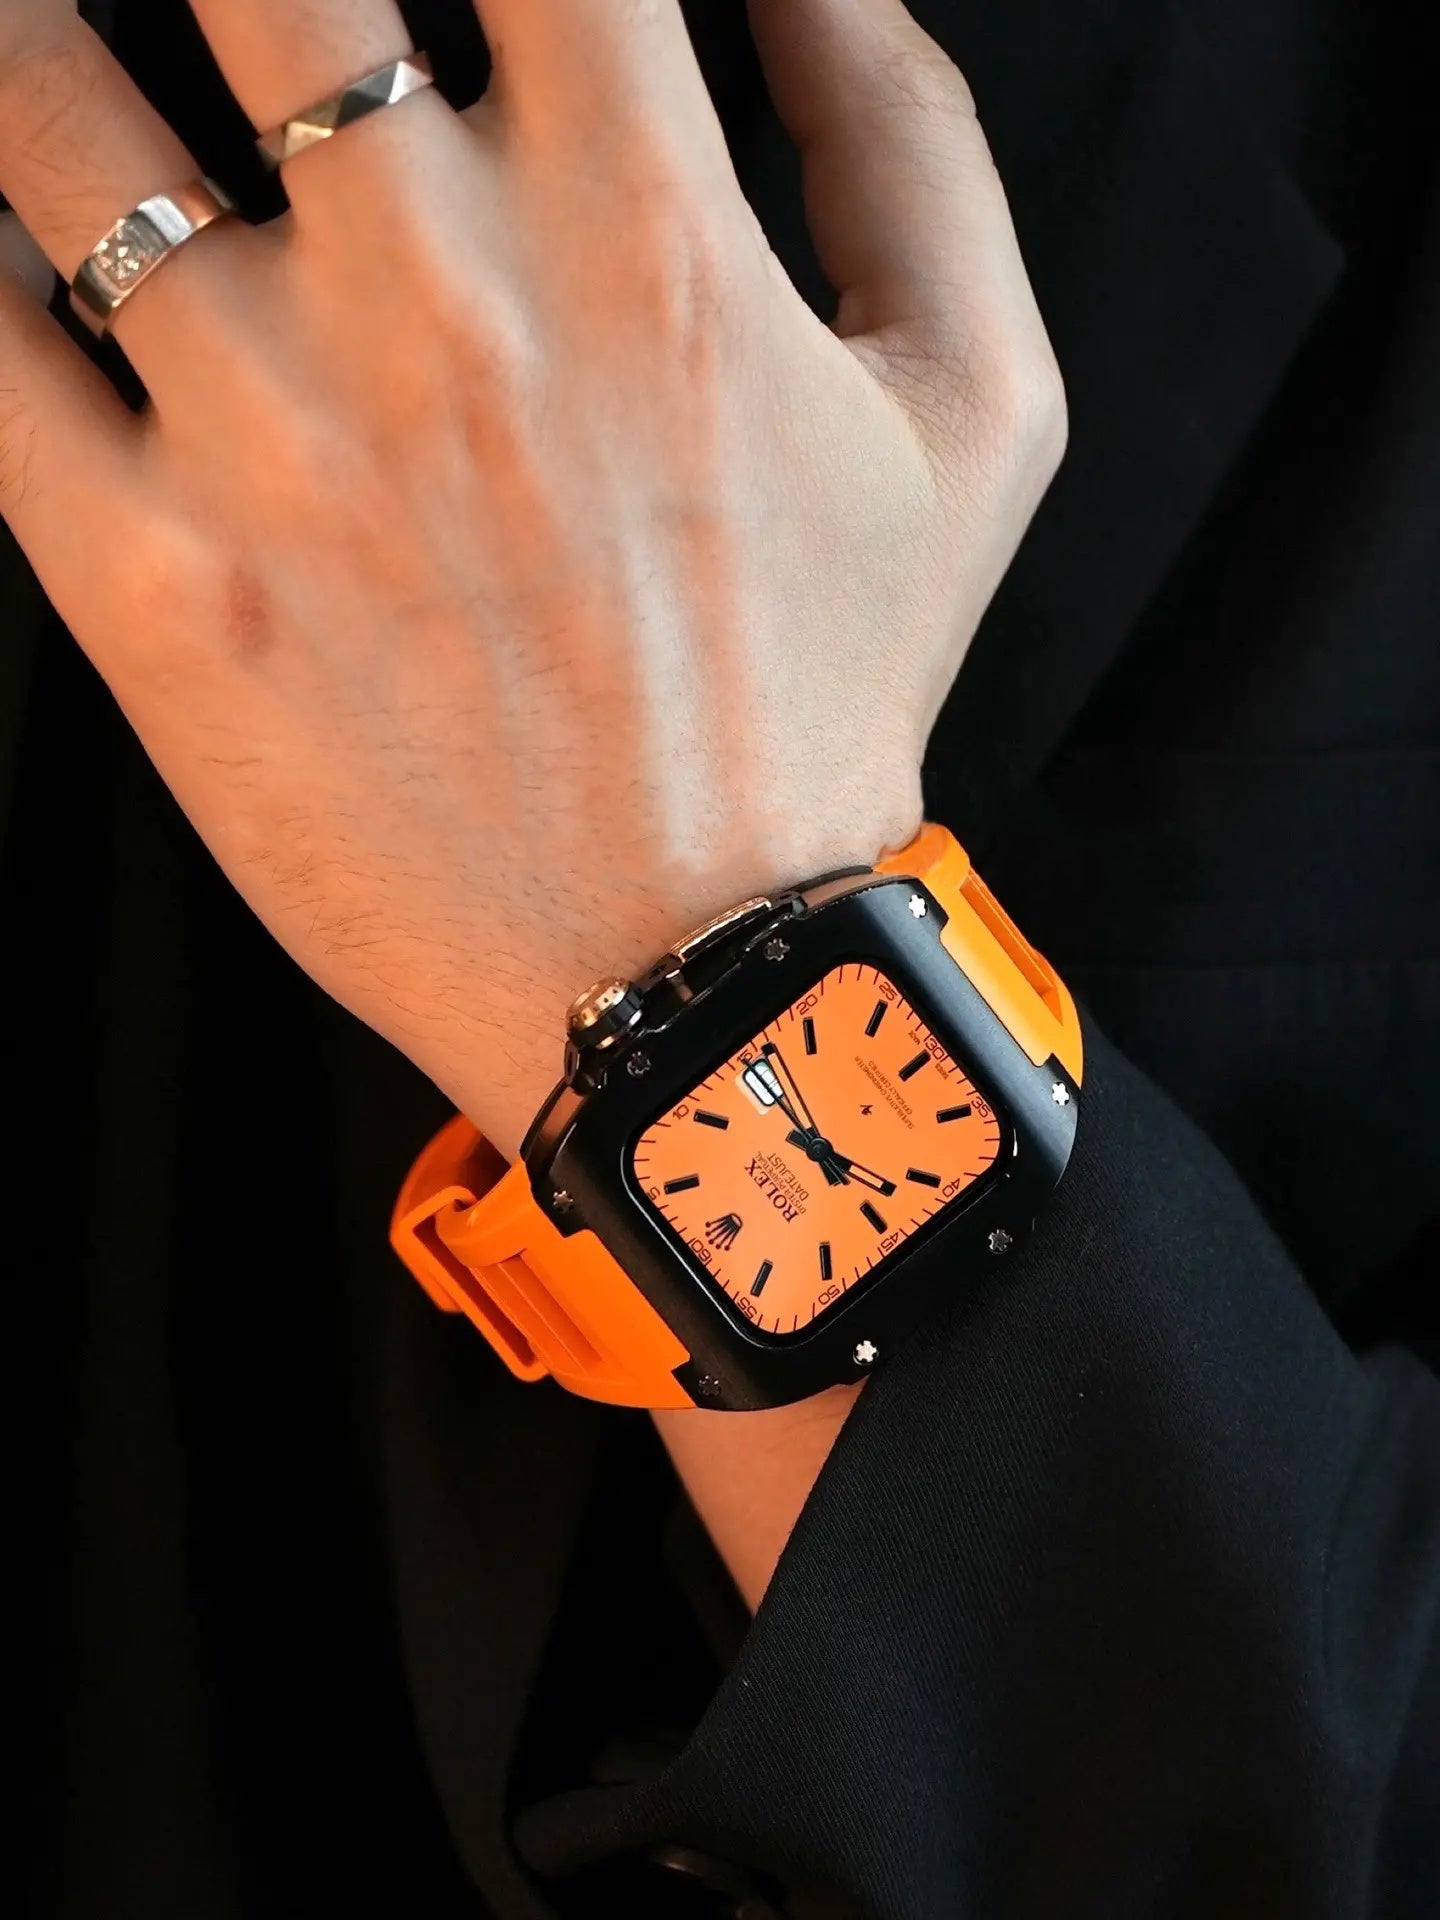 Kewusuma Titanium Black Apple Watch Case with Orange strap wore by a man with a black coat